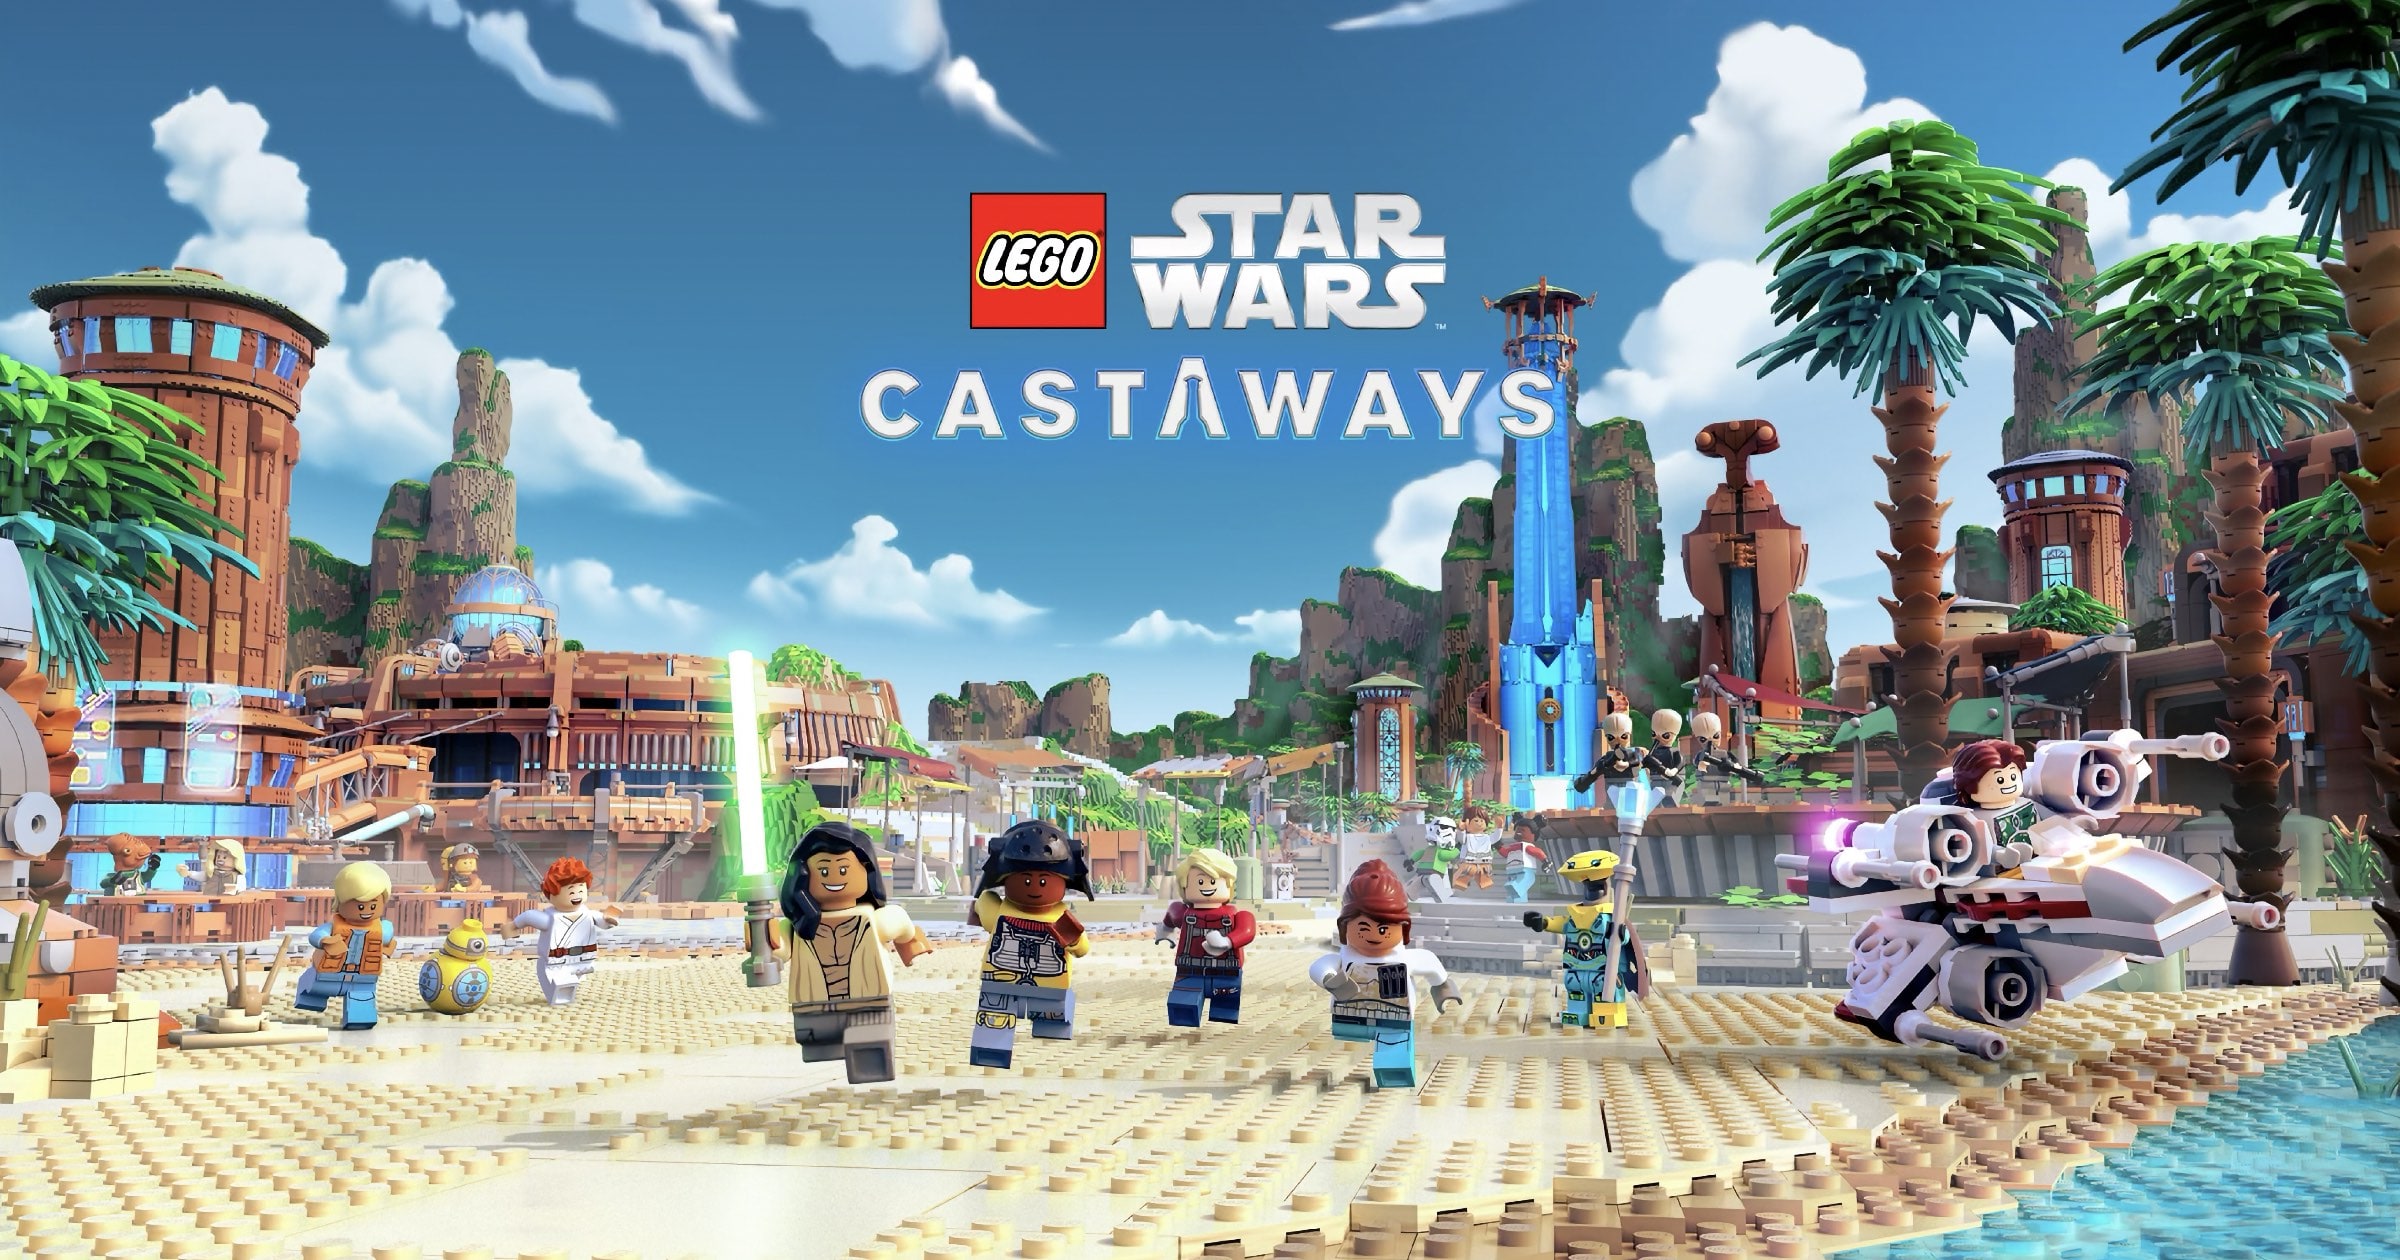 Play ‘LEGO Star Wars Castaways’ Now on Apple Arcade